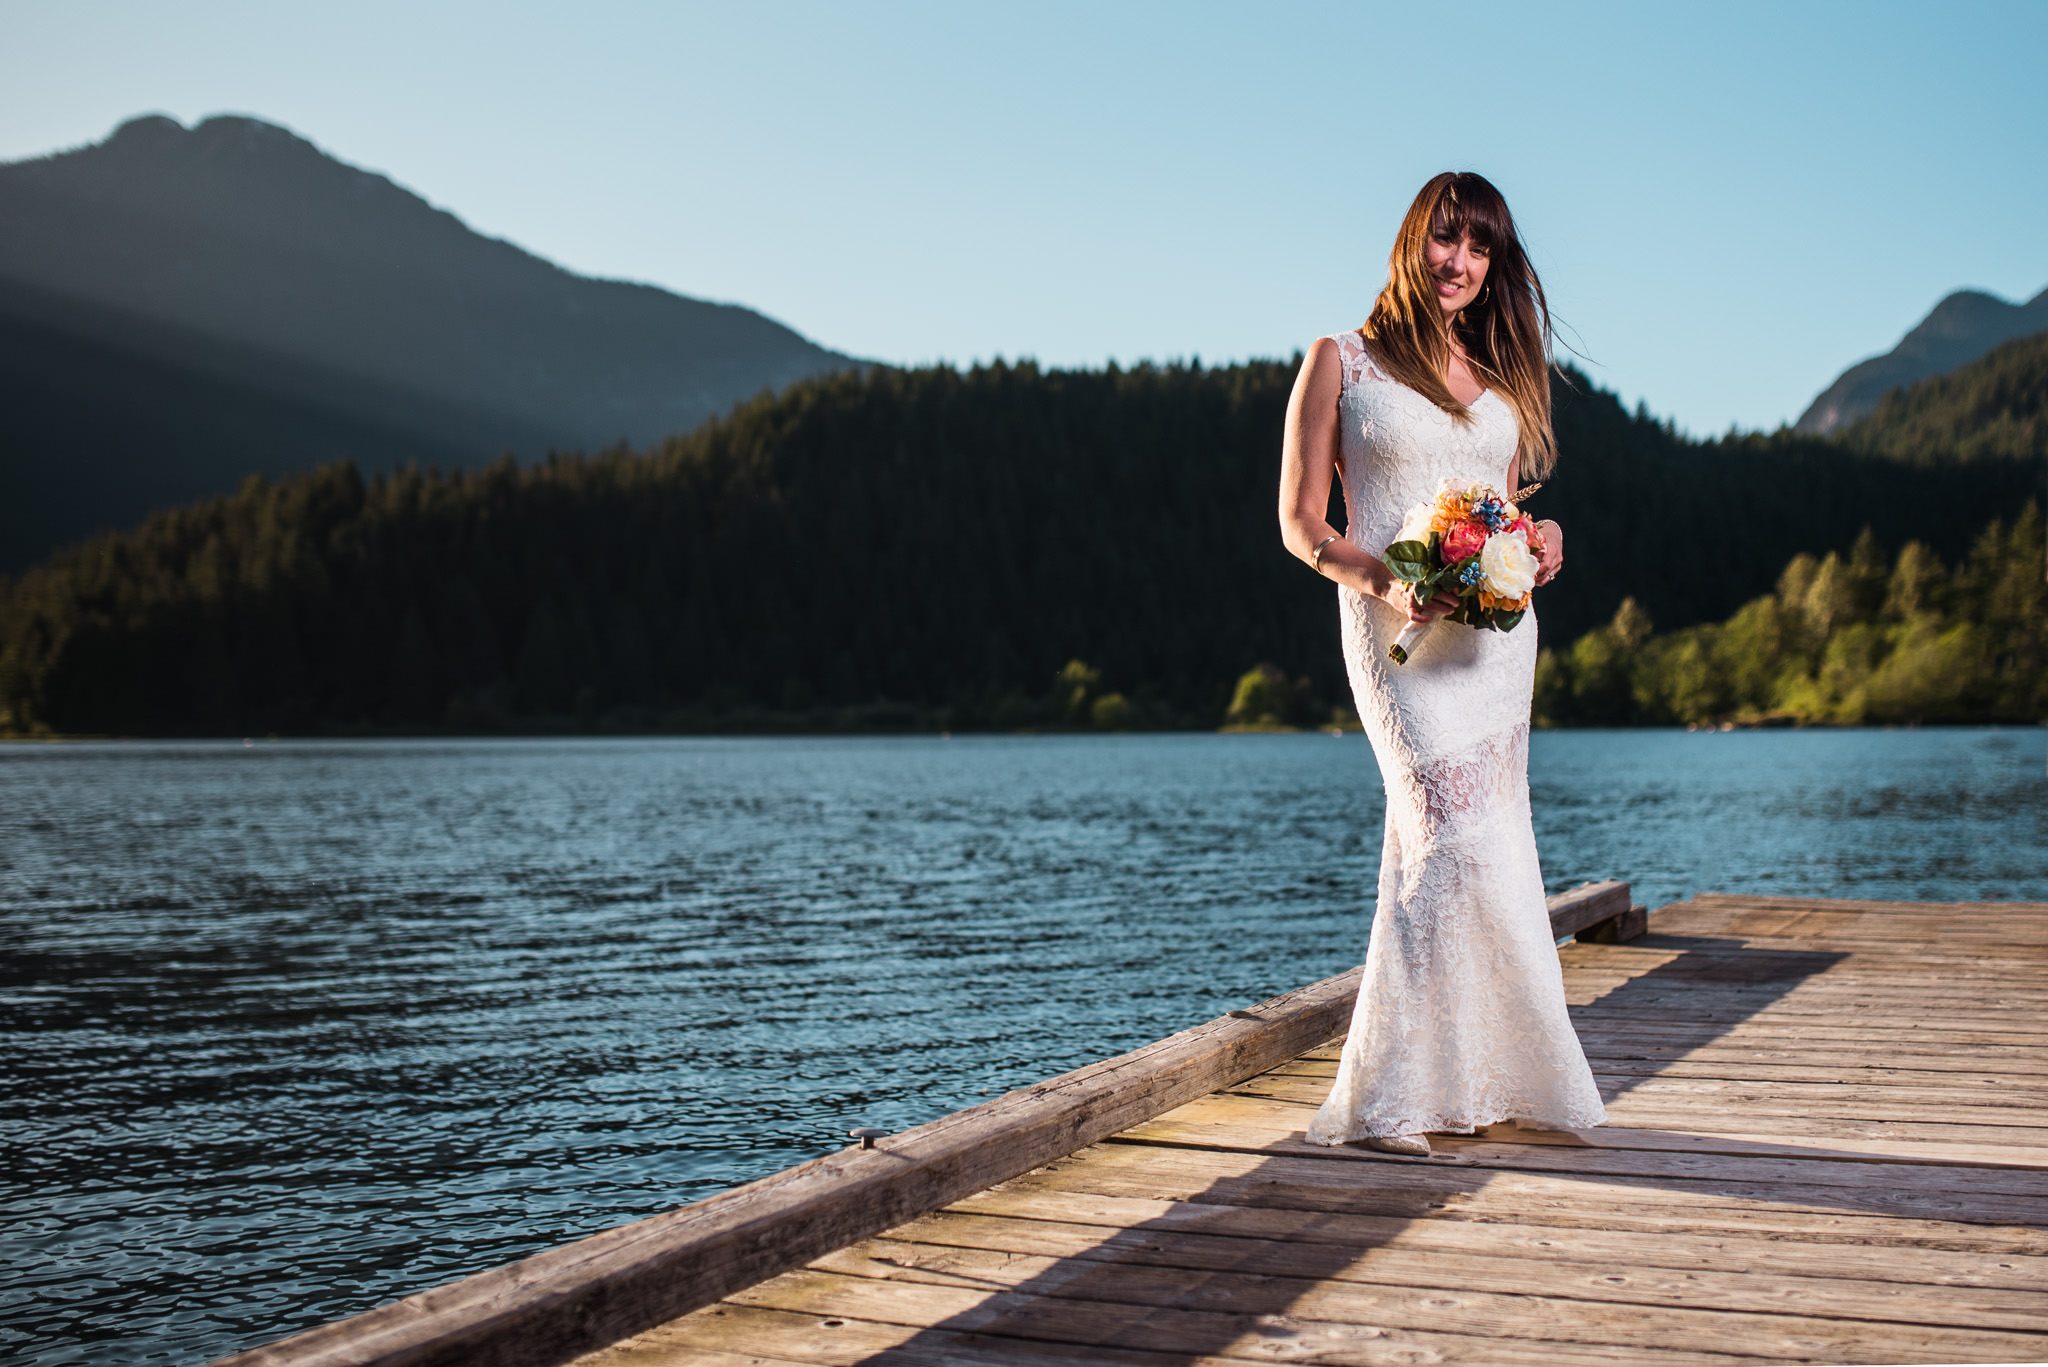 Melanie-Matt-Pitt-Lake-Post-Wedding-Shoot-Victoria-Wedding-Photographers-13.jpg